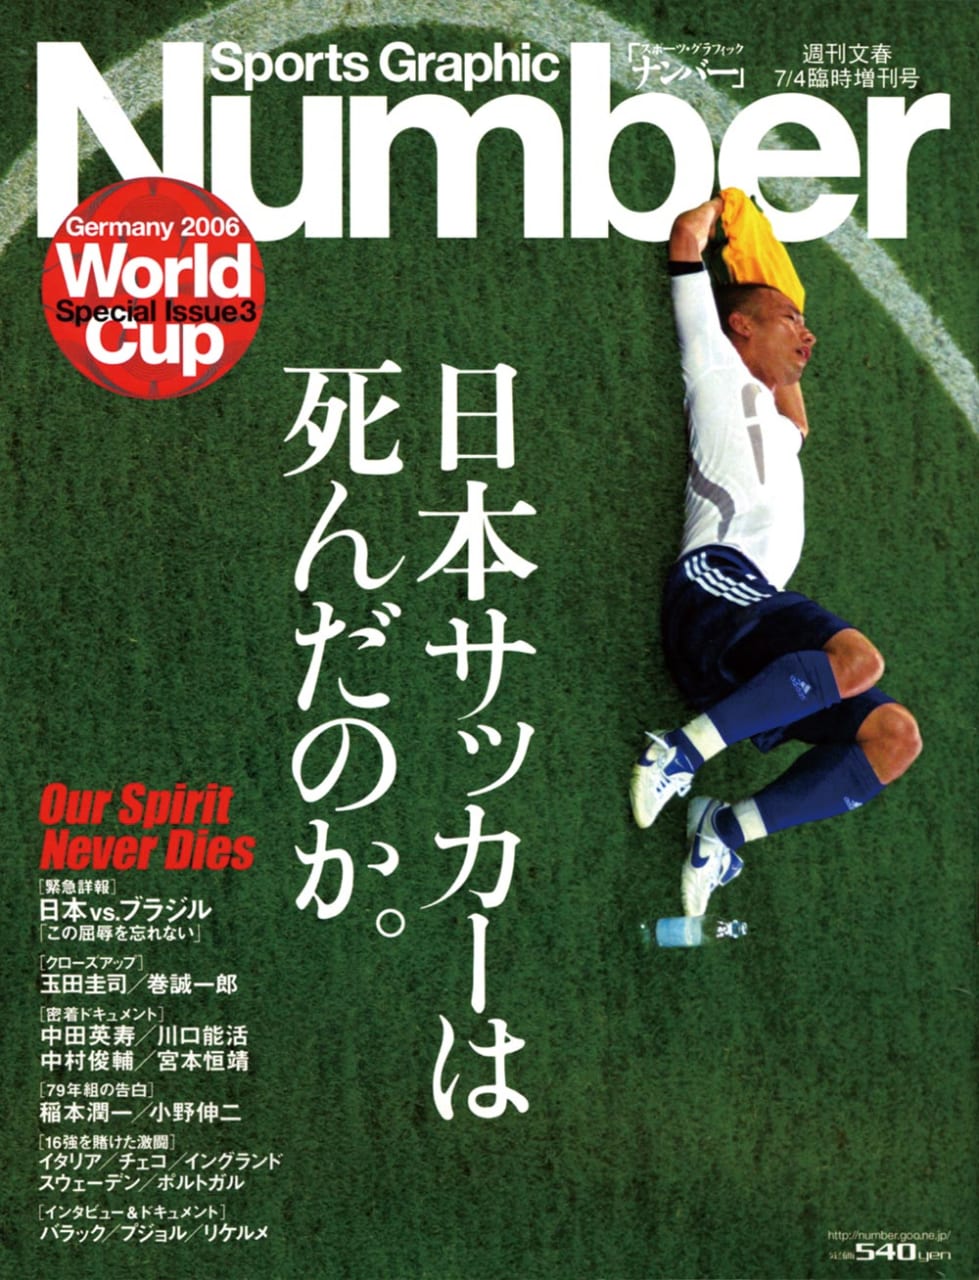 Sports Graphic Number 2006/7/4臨時増刊号
2006年6月27日発売
表紙撮影：Tomohiko Suzui